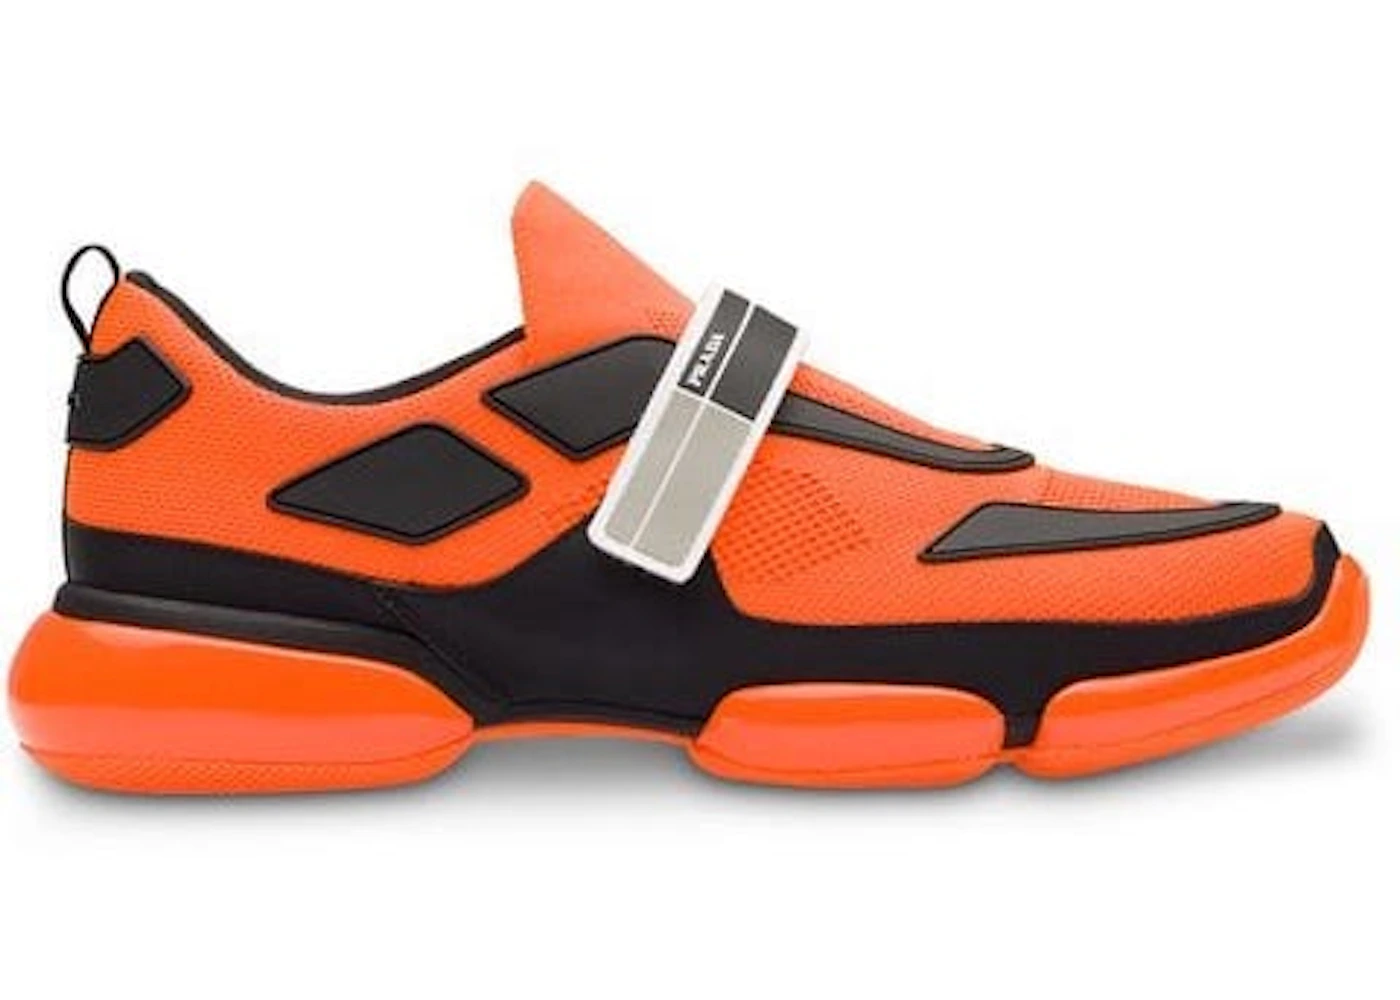 Bold And Vibrant: Orange Prada Shoes For Men - Shoe Effect